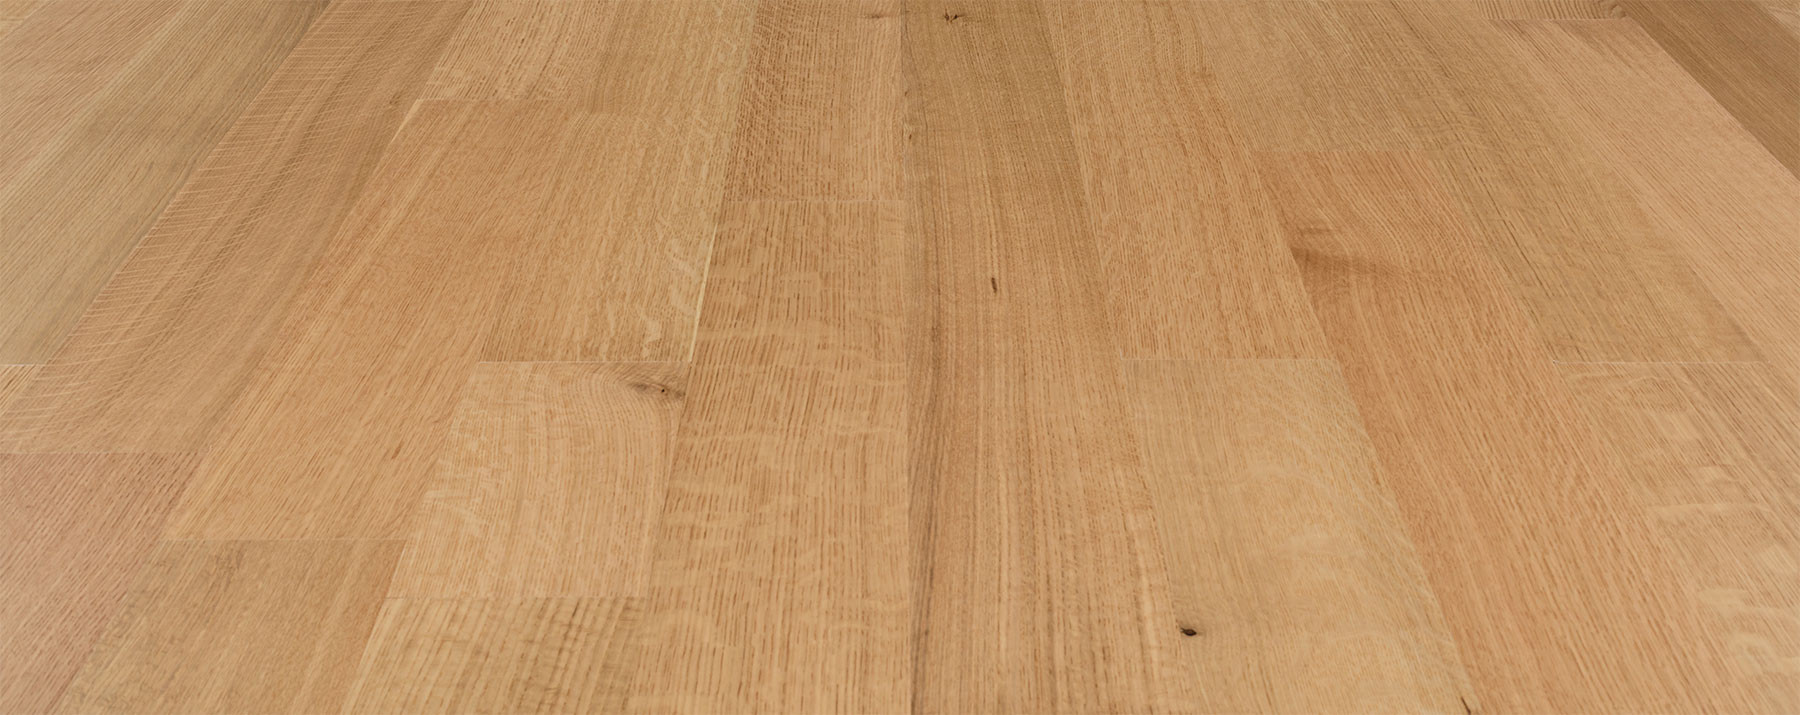 17 Recommended 5 8 Hardwood Flooring 2024 free download 5 8 hardwood flooring of american quartered white oak 5e280b3 etx surfaces within etx surfaces american quartered white oak wood flooring